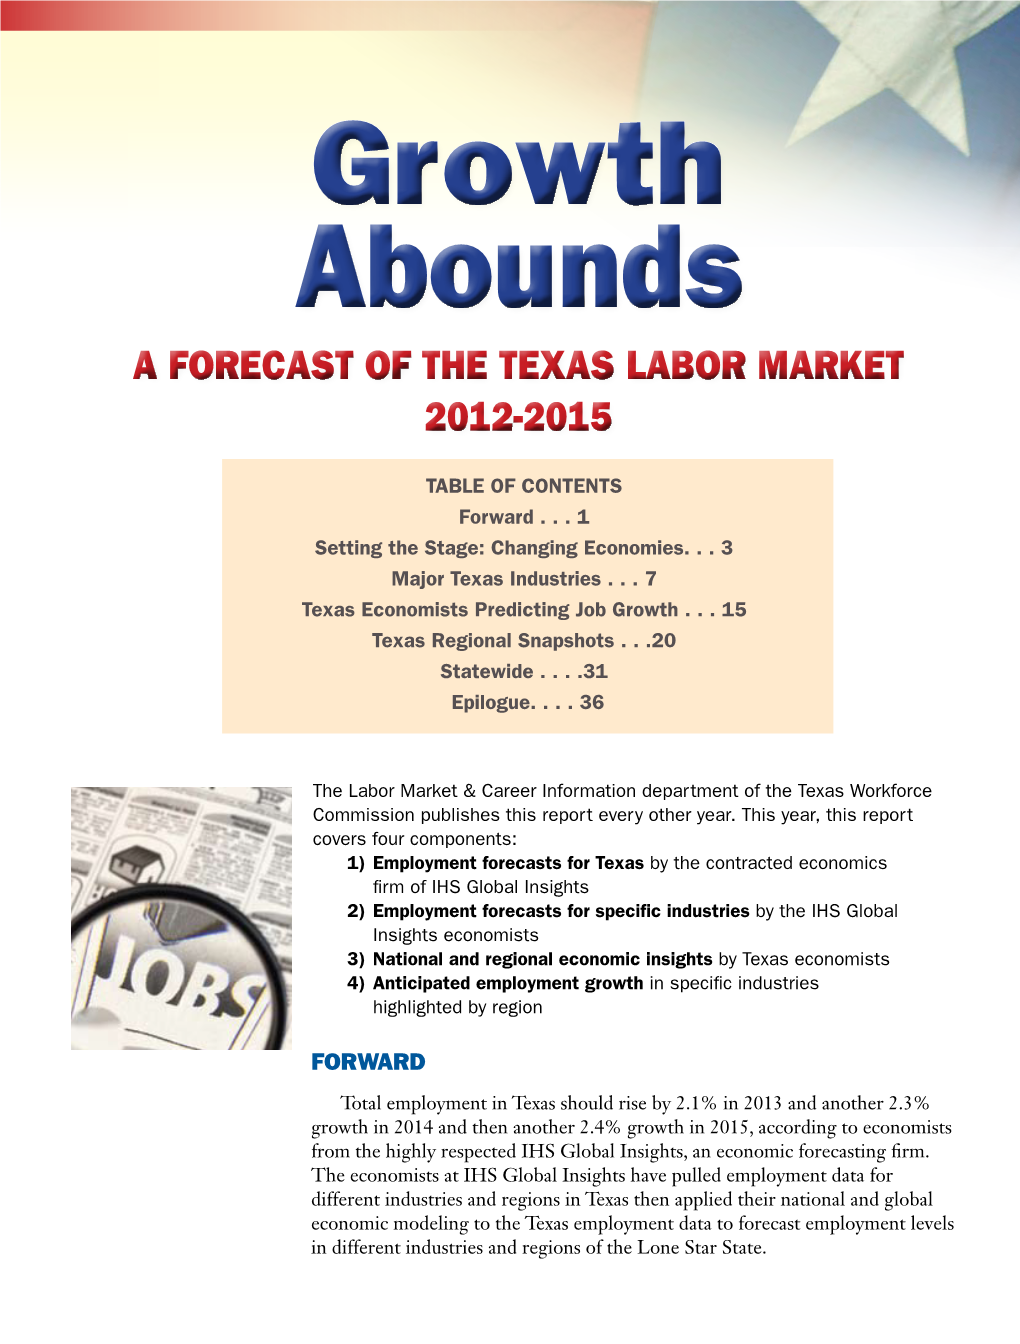 Forecast of the Texas Labor Market 2012-2015